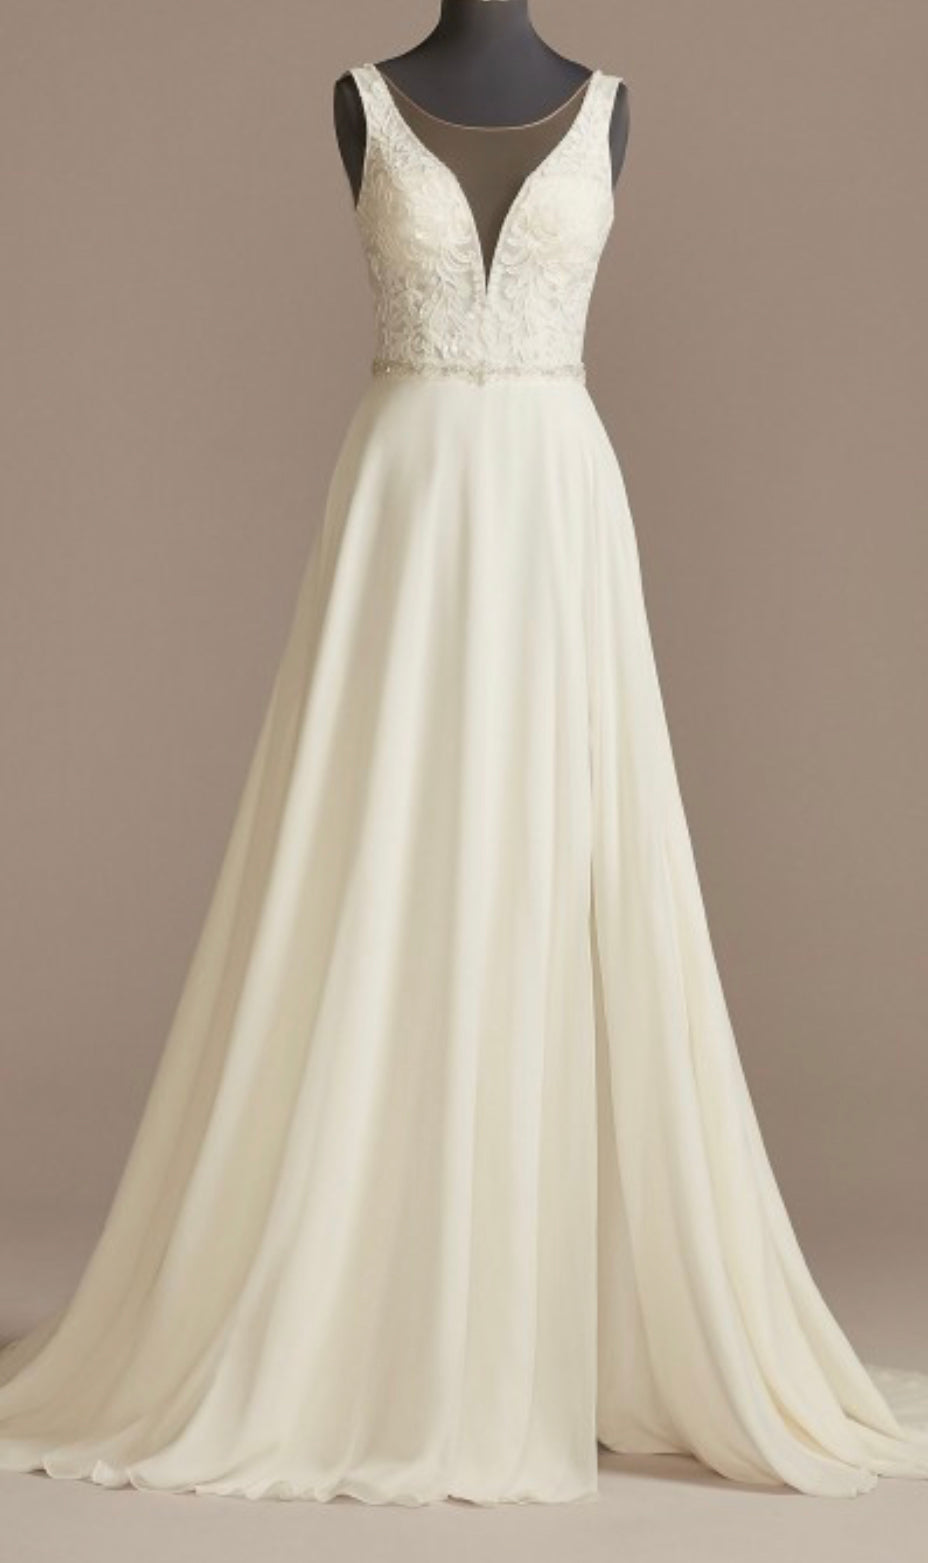 Galina Signature 'Lace Applique' wedding dress size-24W NEW